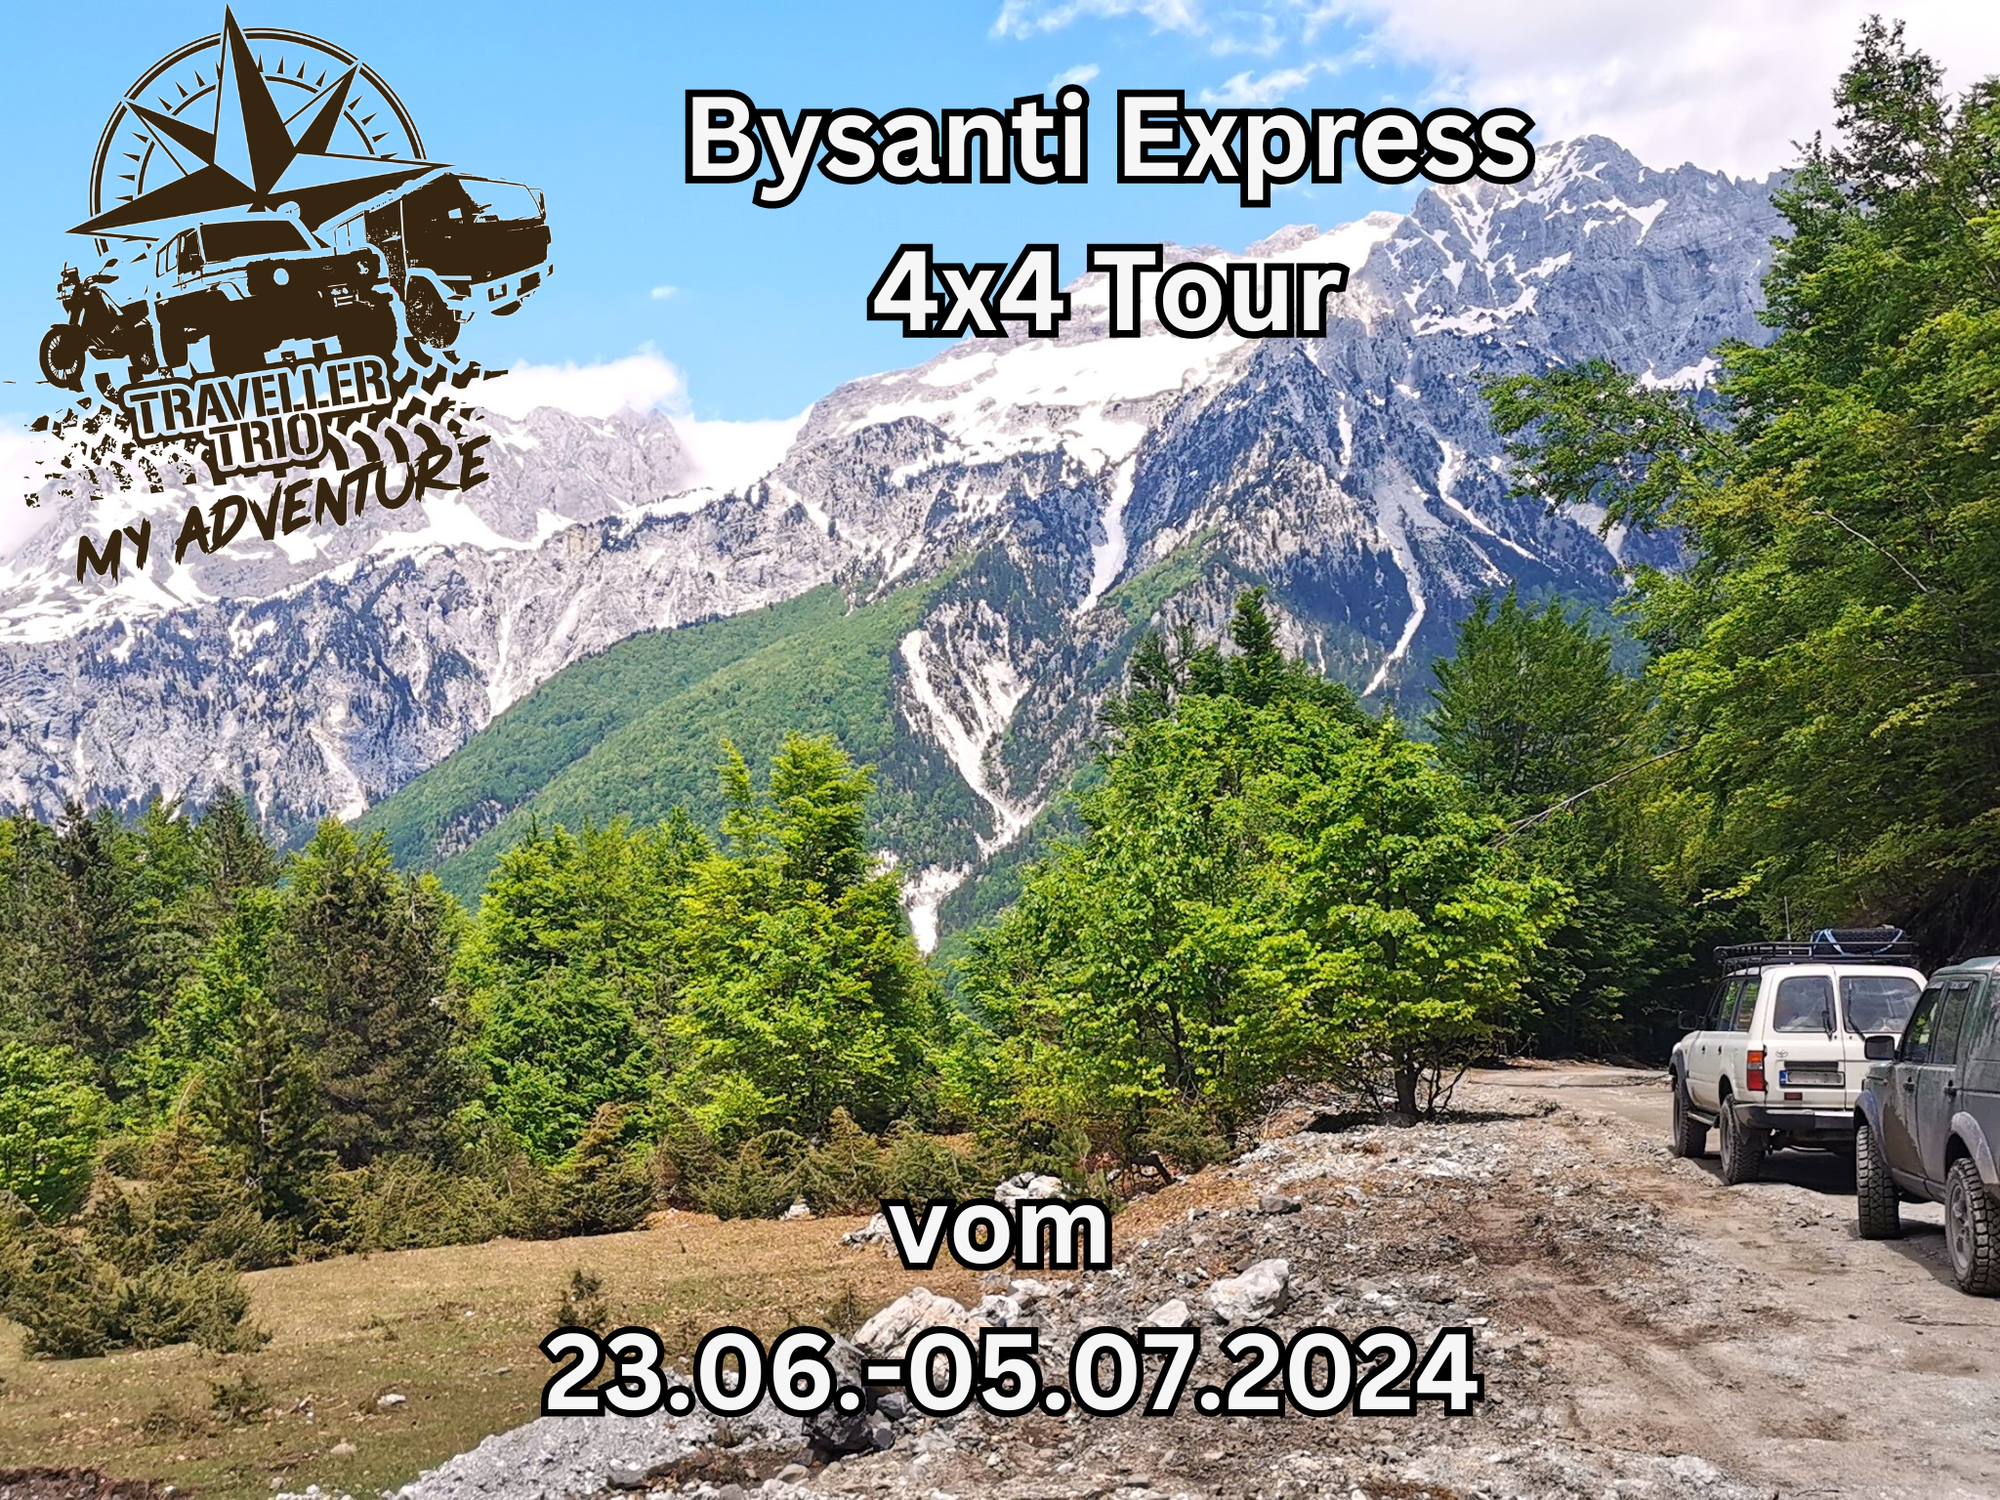 Bysanti Express 4x4 Tour vom 23.06.-05.07.